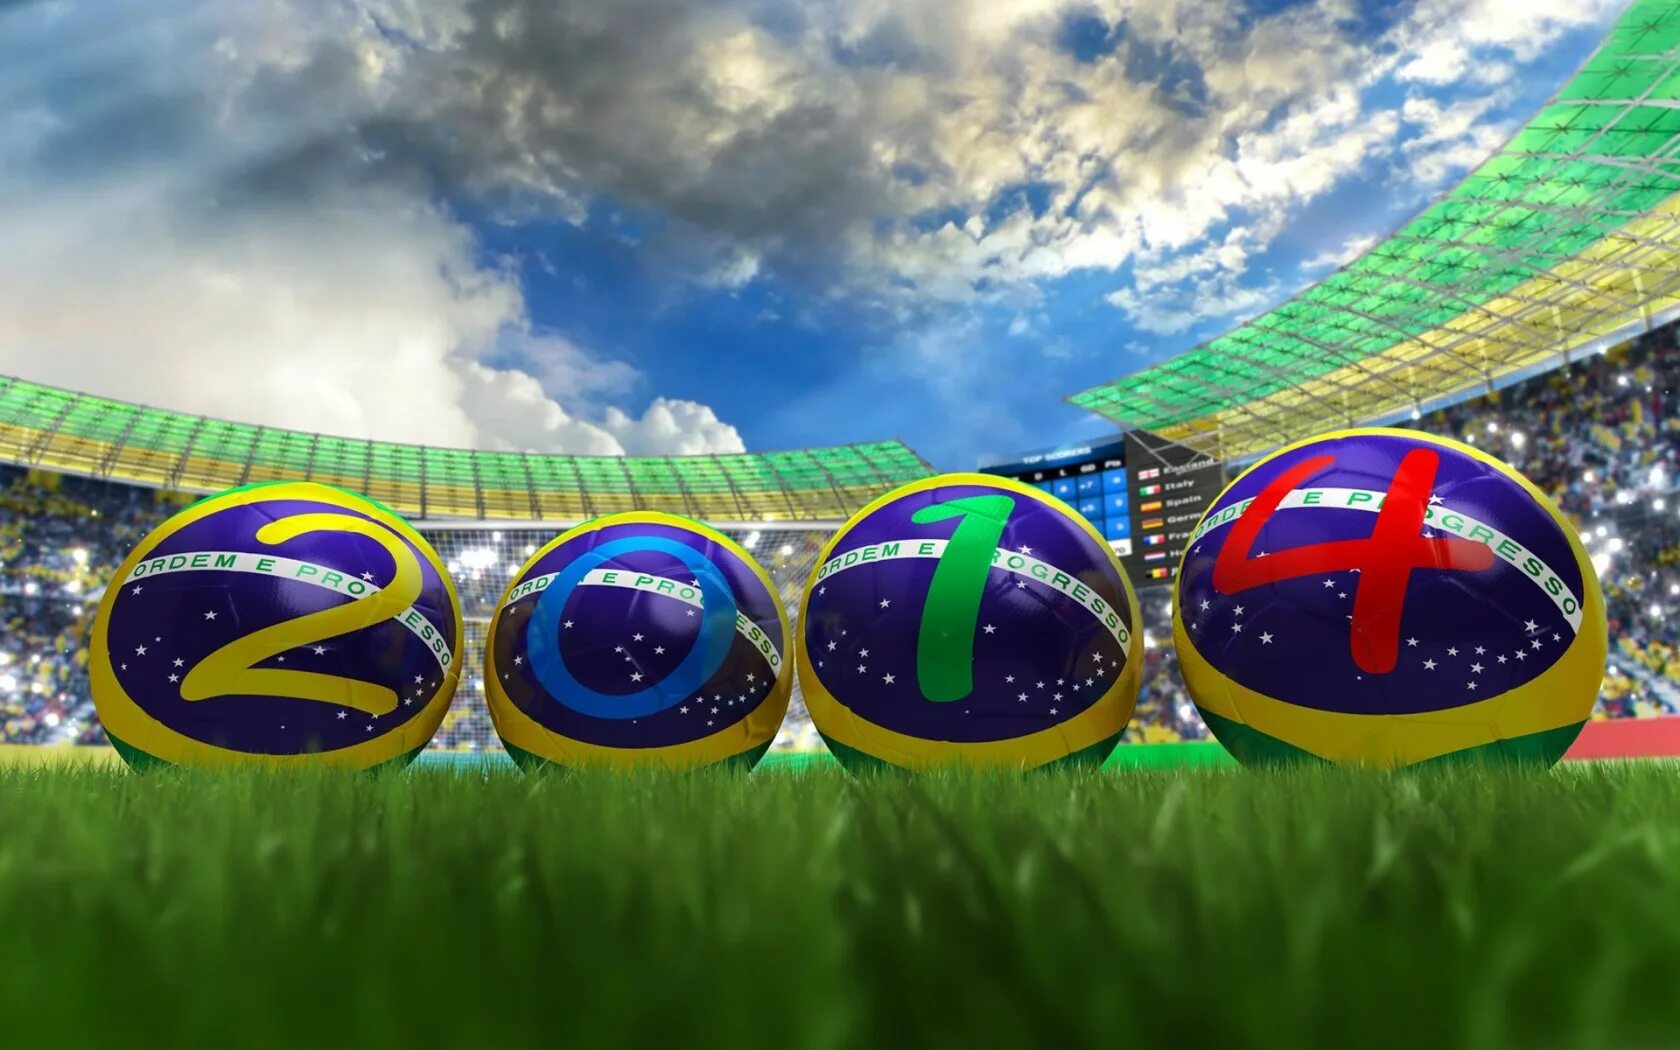 Мяч ЧМ Бразилия 2014. The World Cup 2014 Brazil мяч.